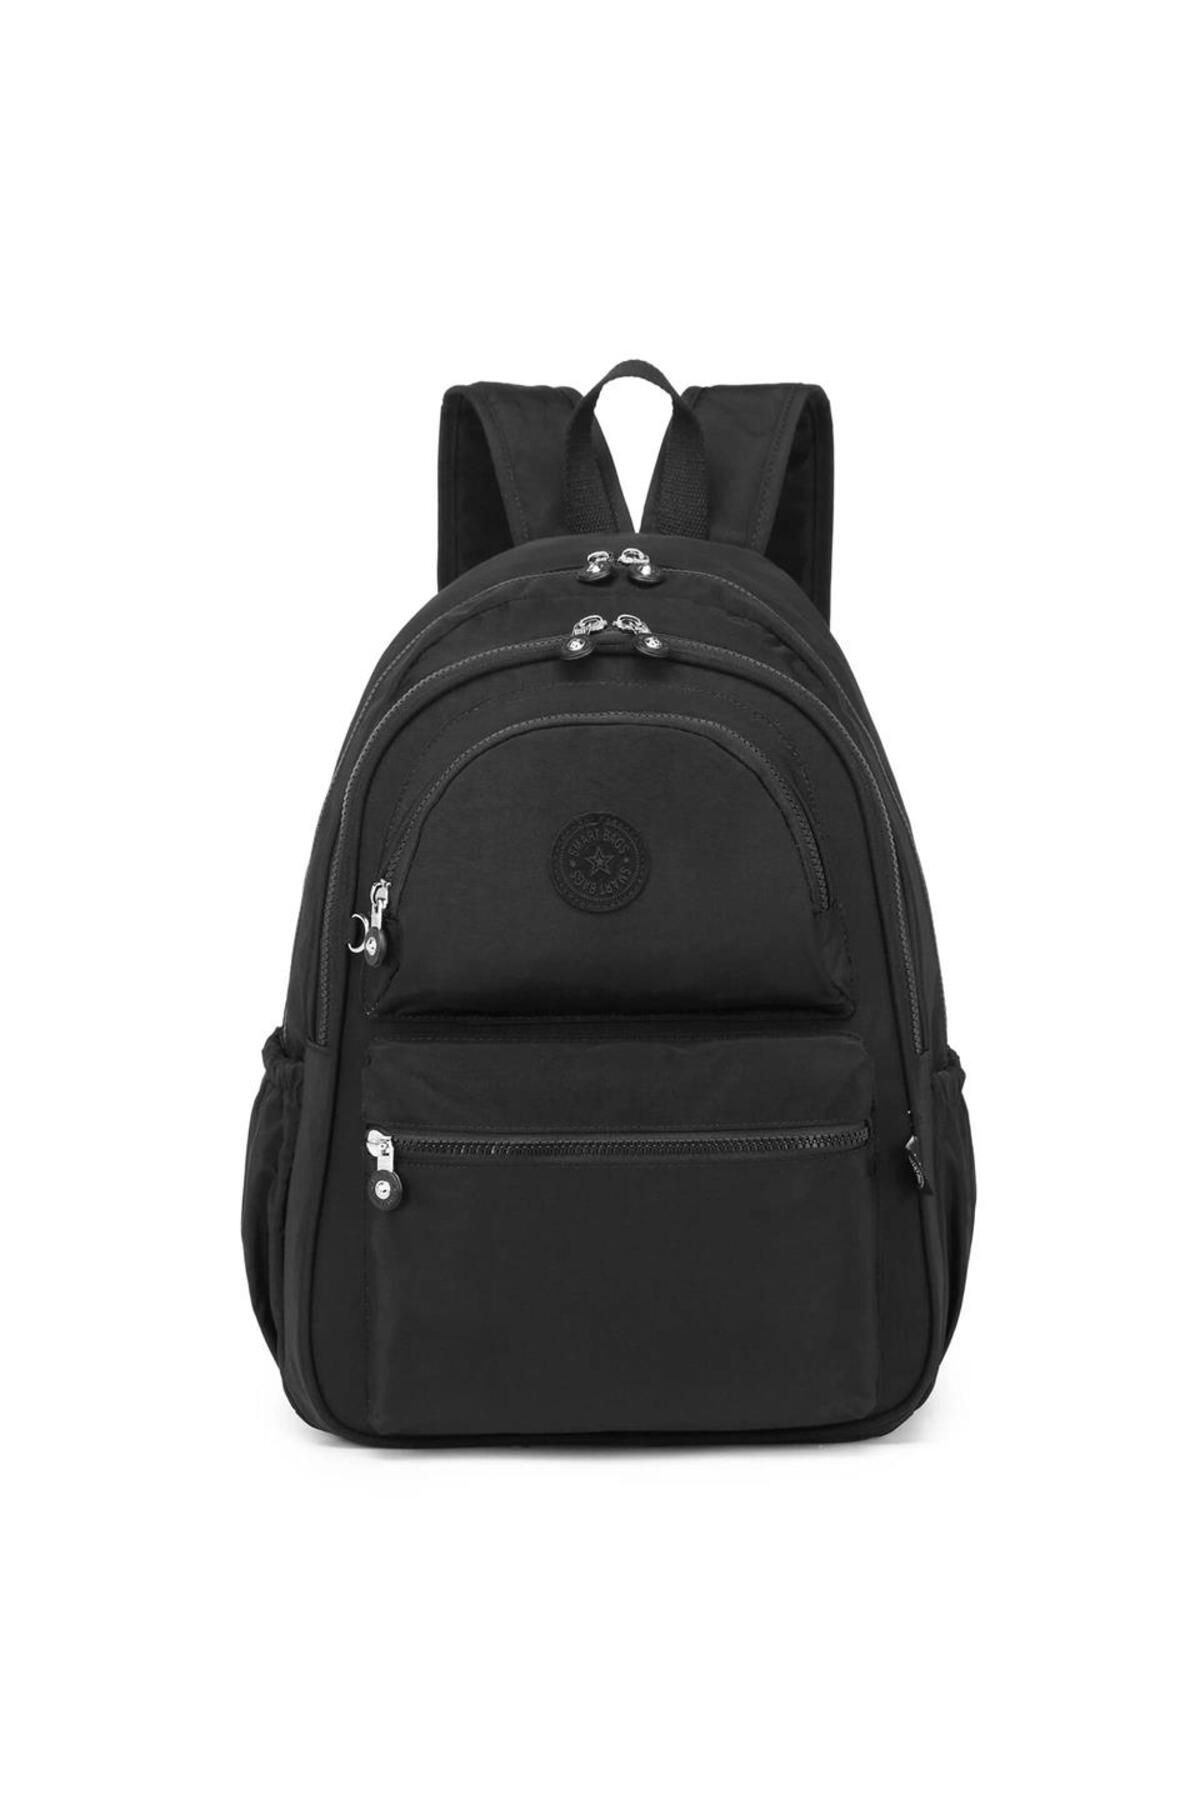 Smart Bags 1050 Sırt Çantası Siyah